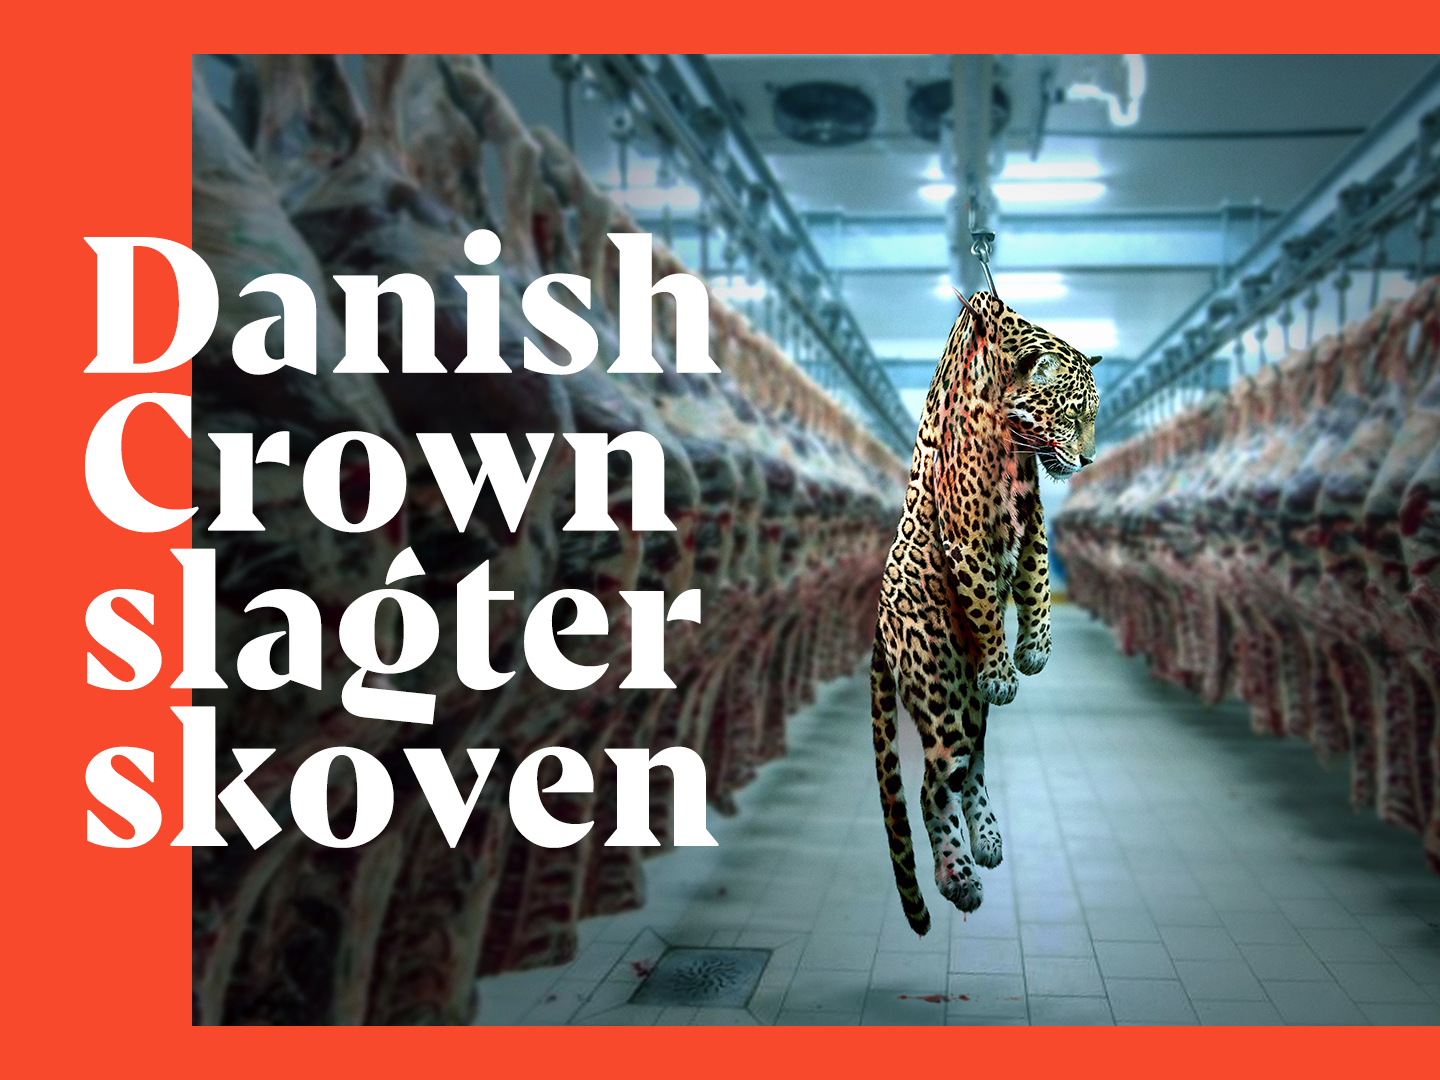 Danish Crown slagter skoven